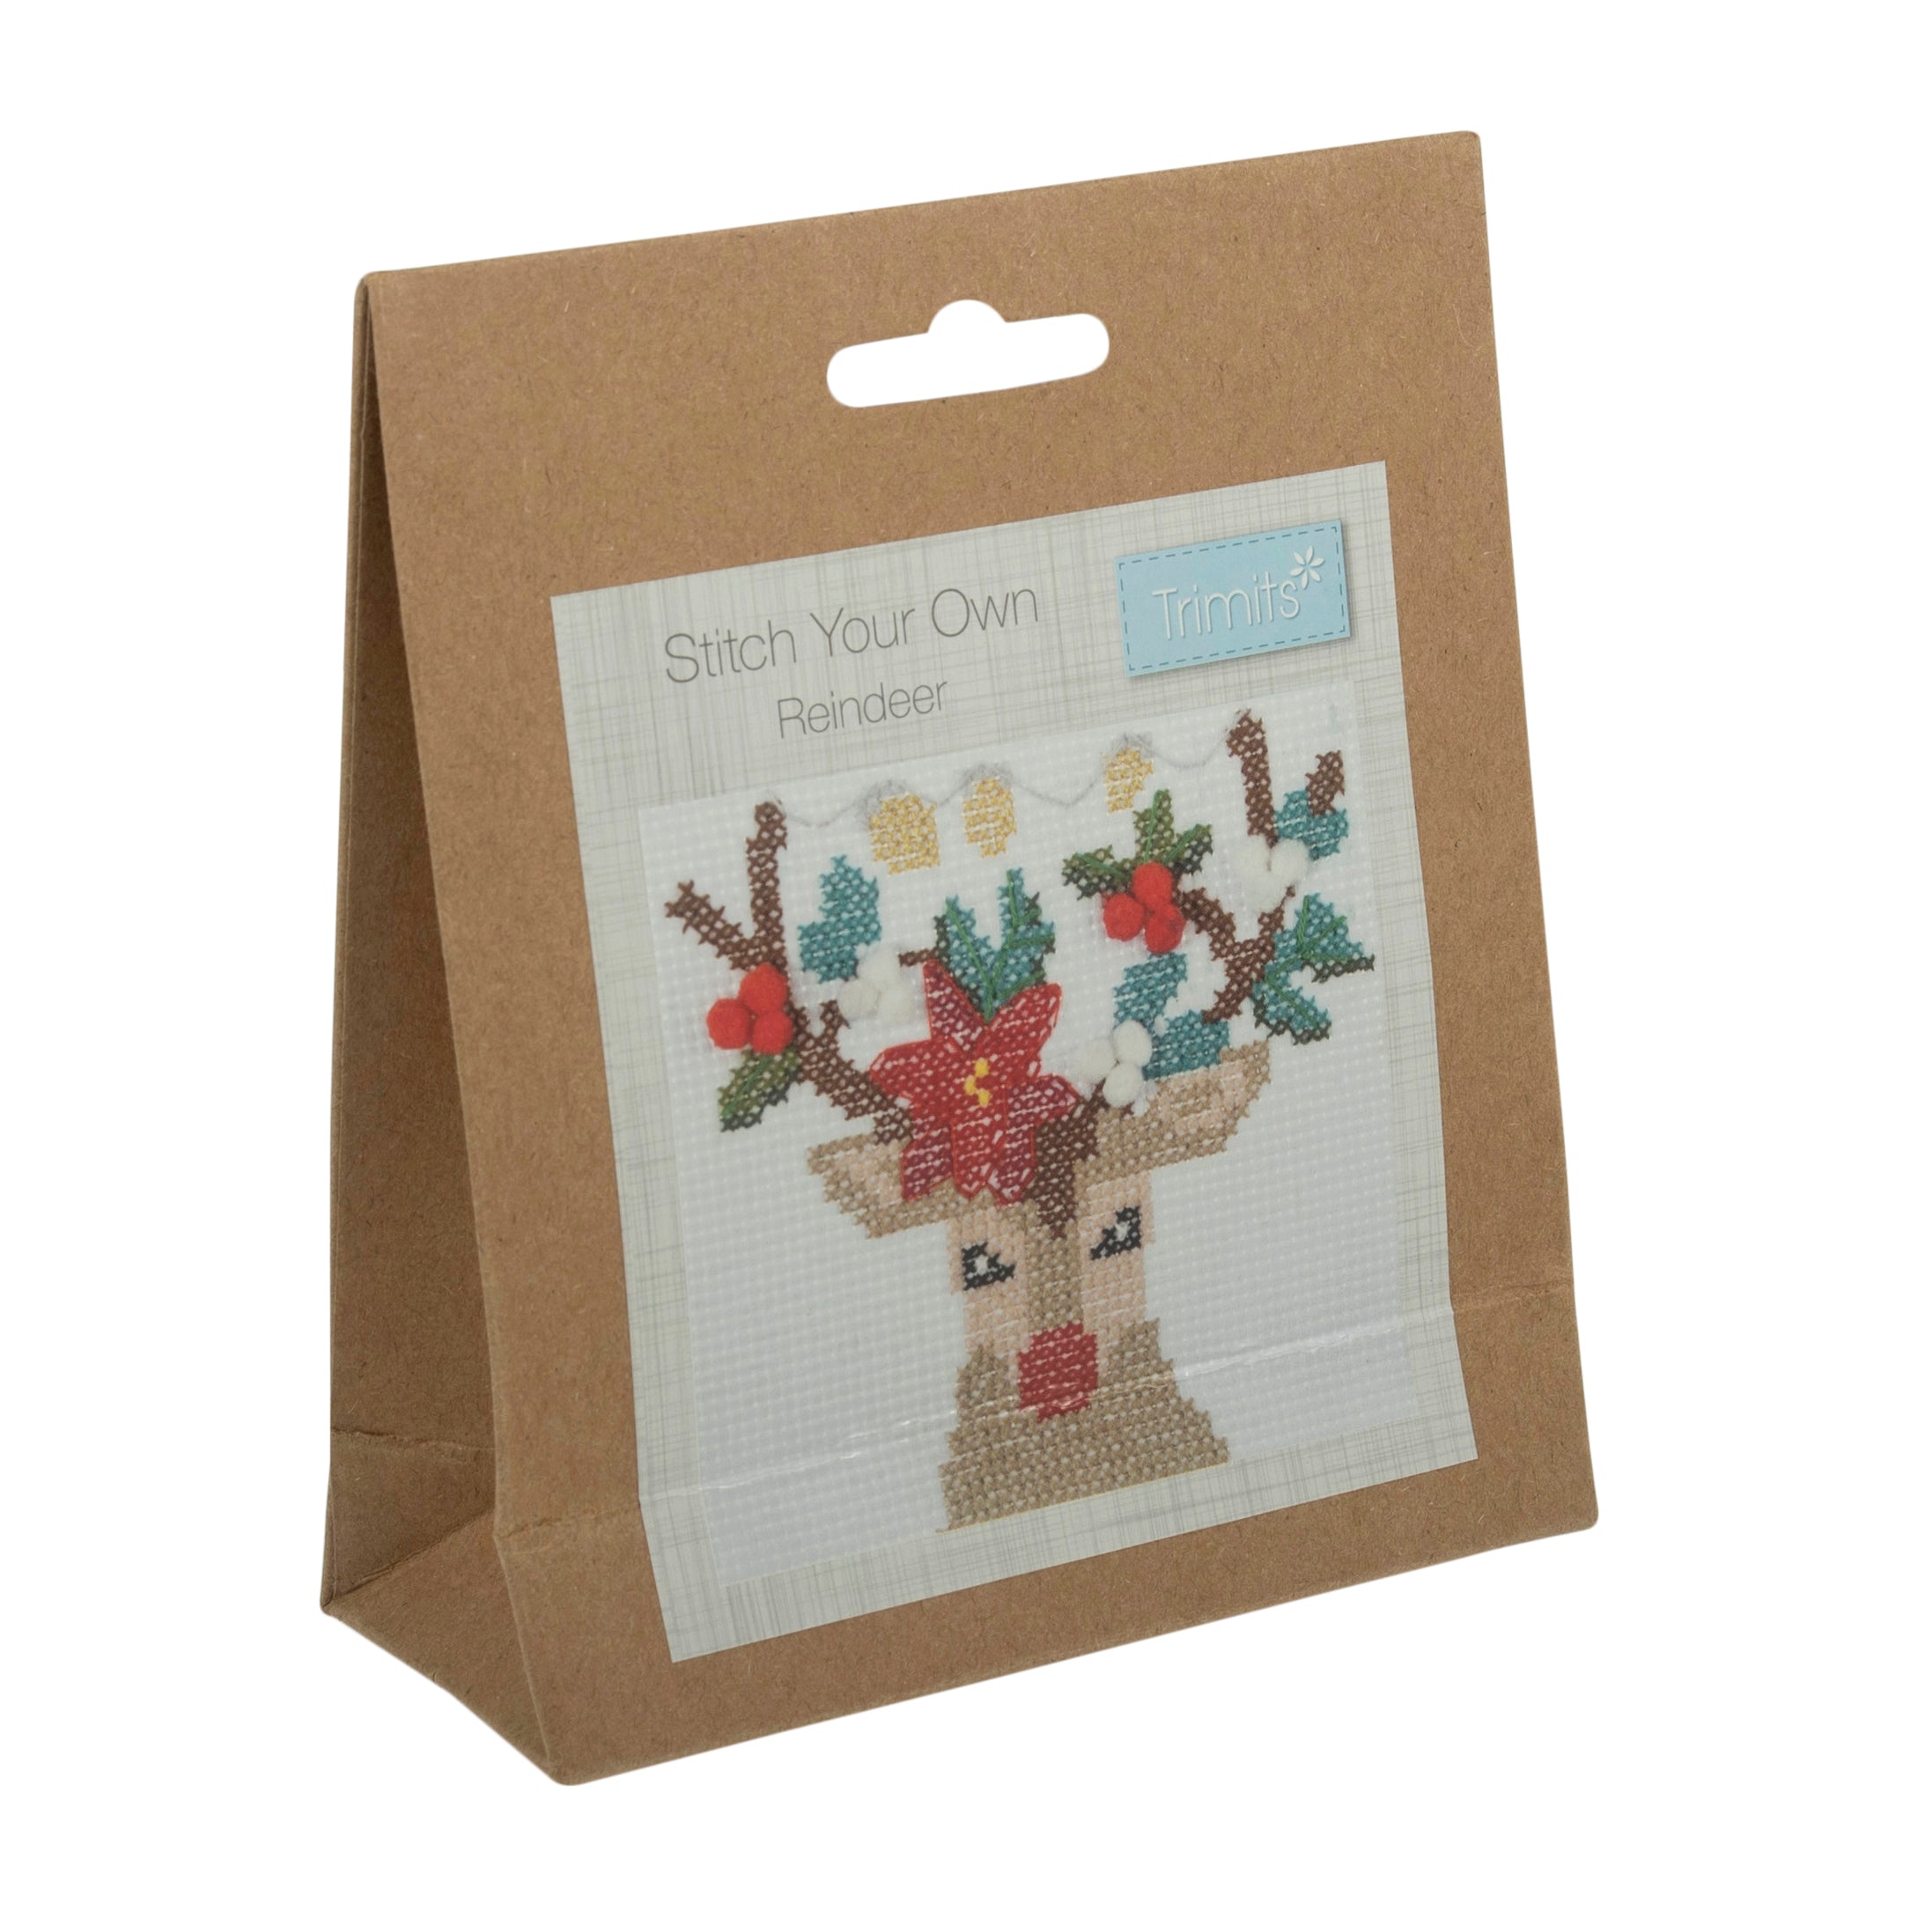 Trimits Festive Cross Stitch Kit: Reindeer